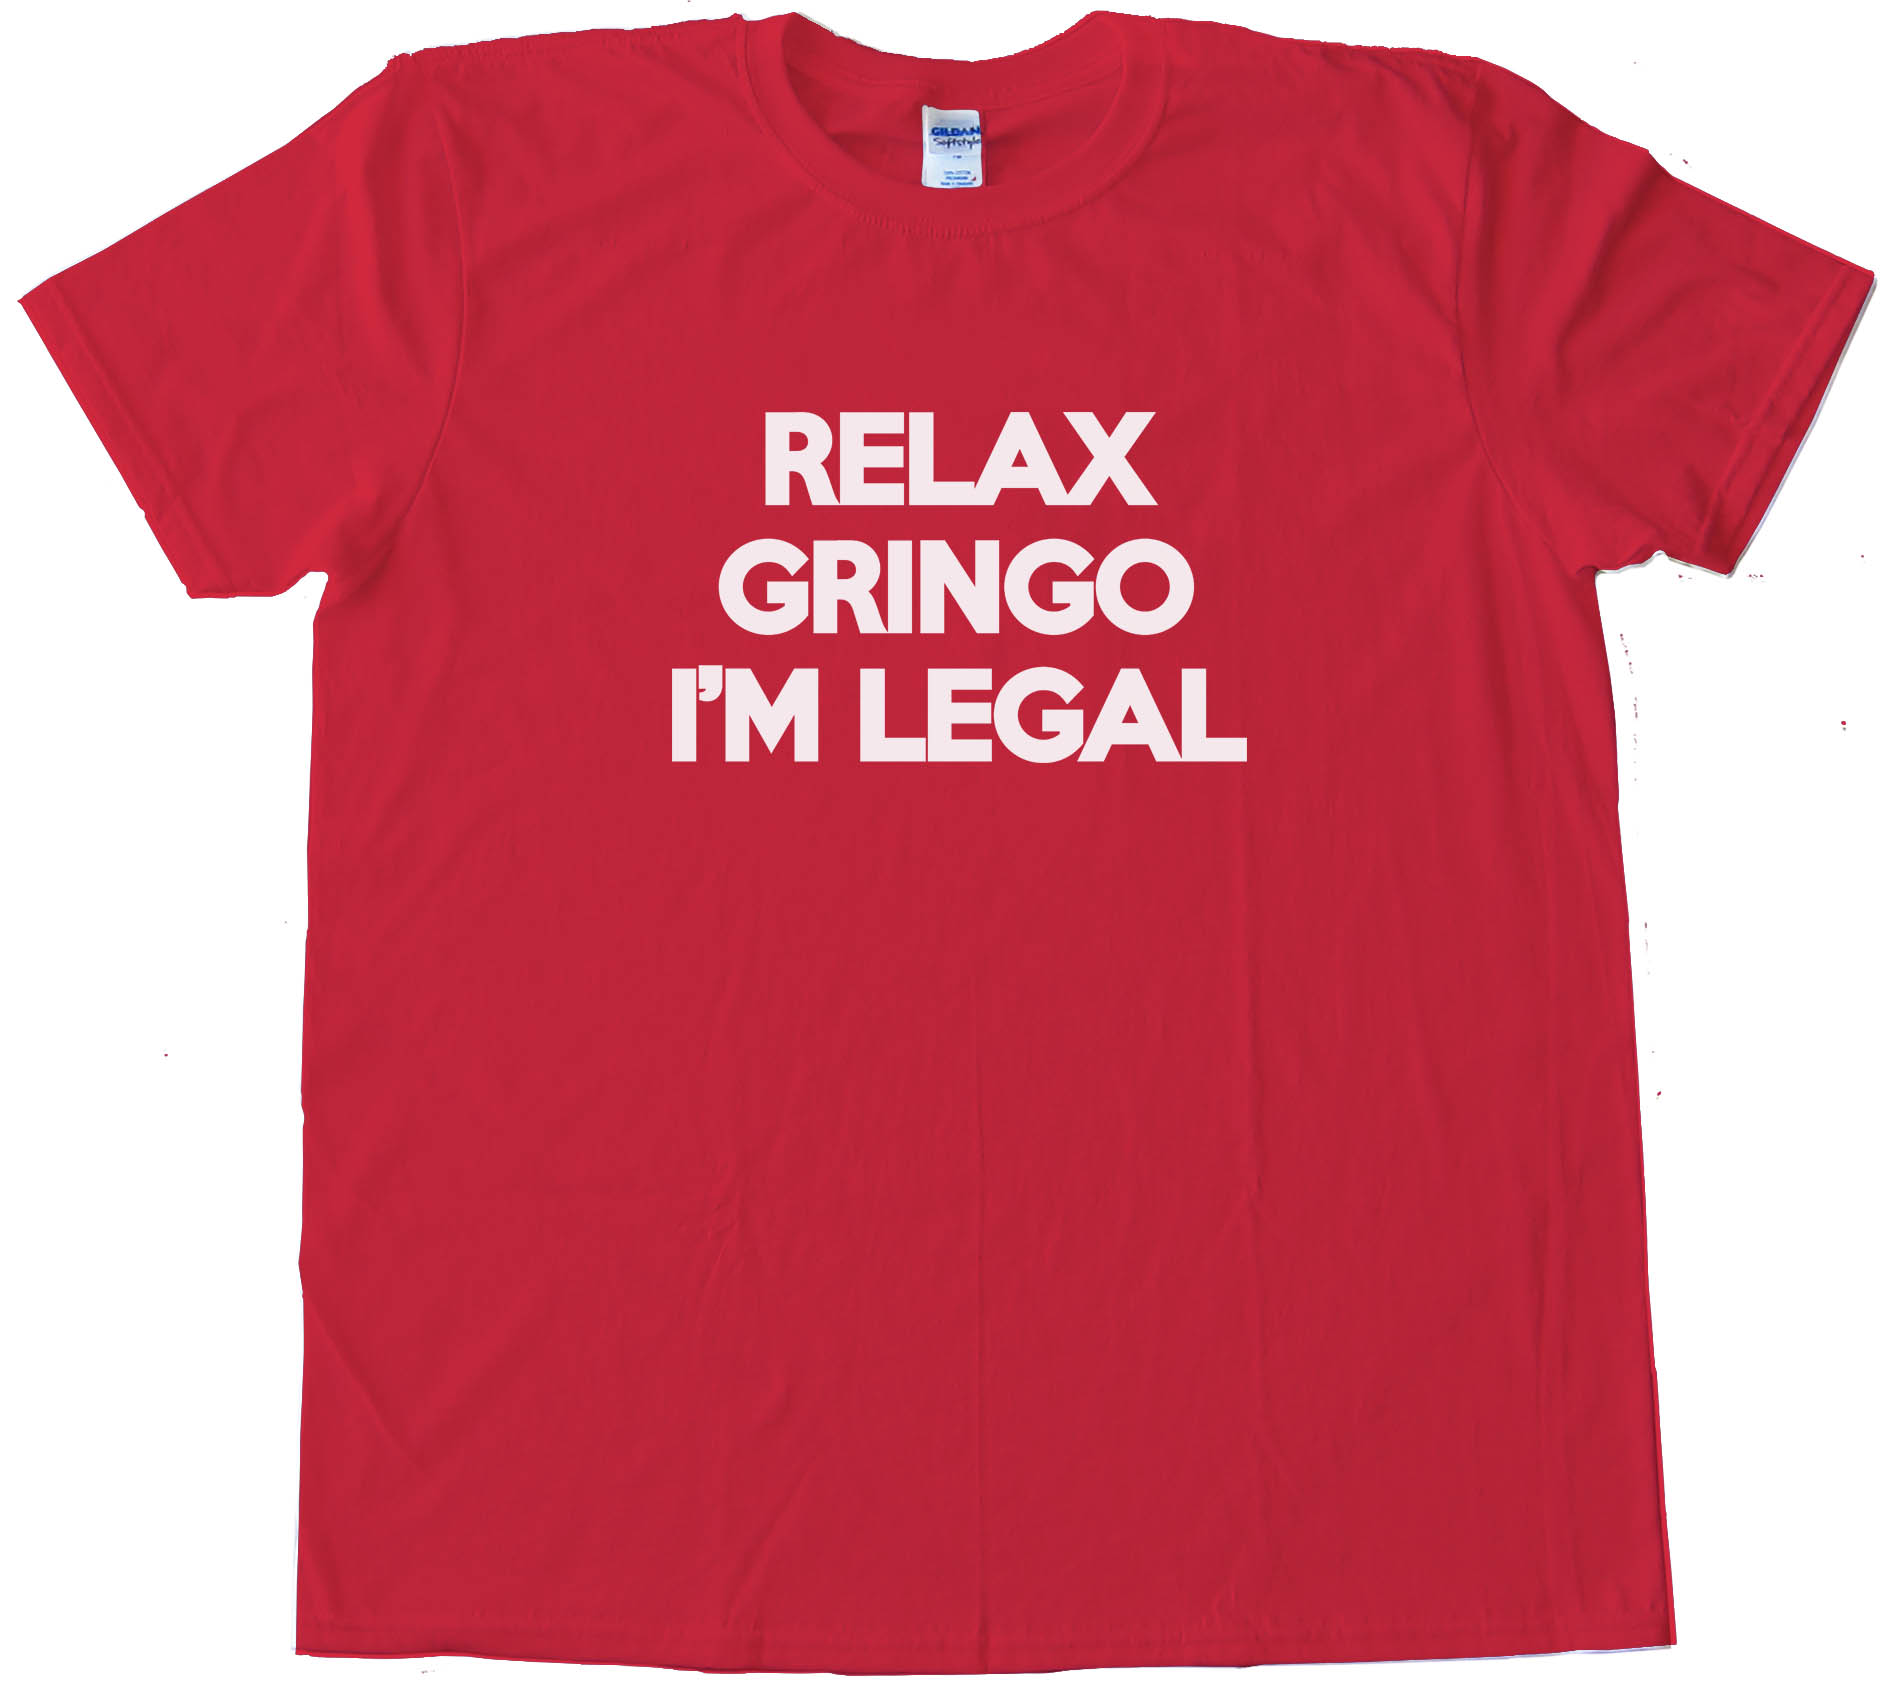 Relax Gringo I'M Legal Tee Shirt